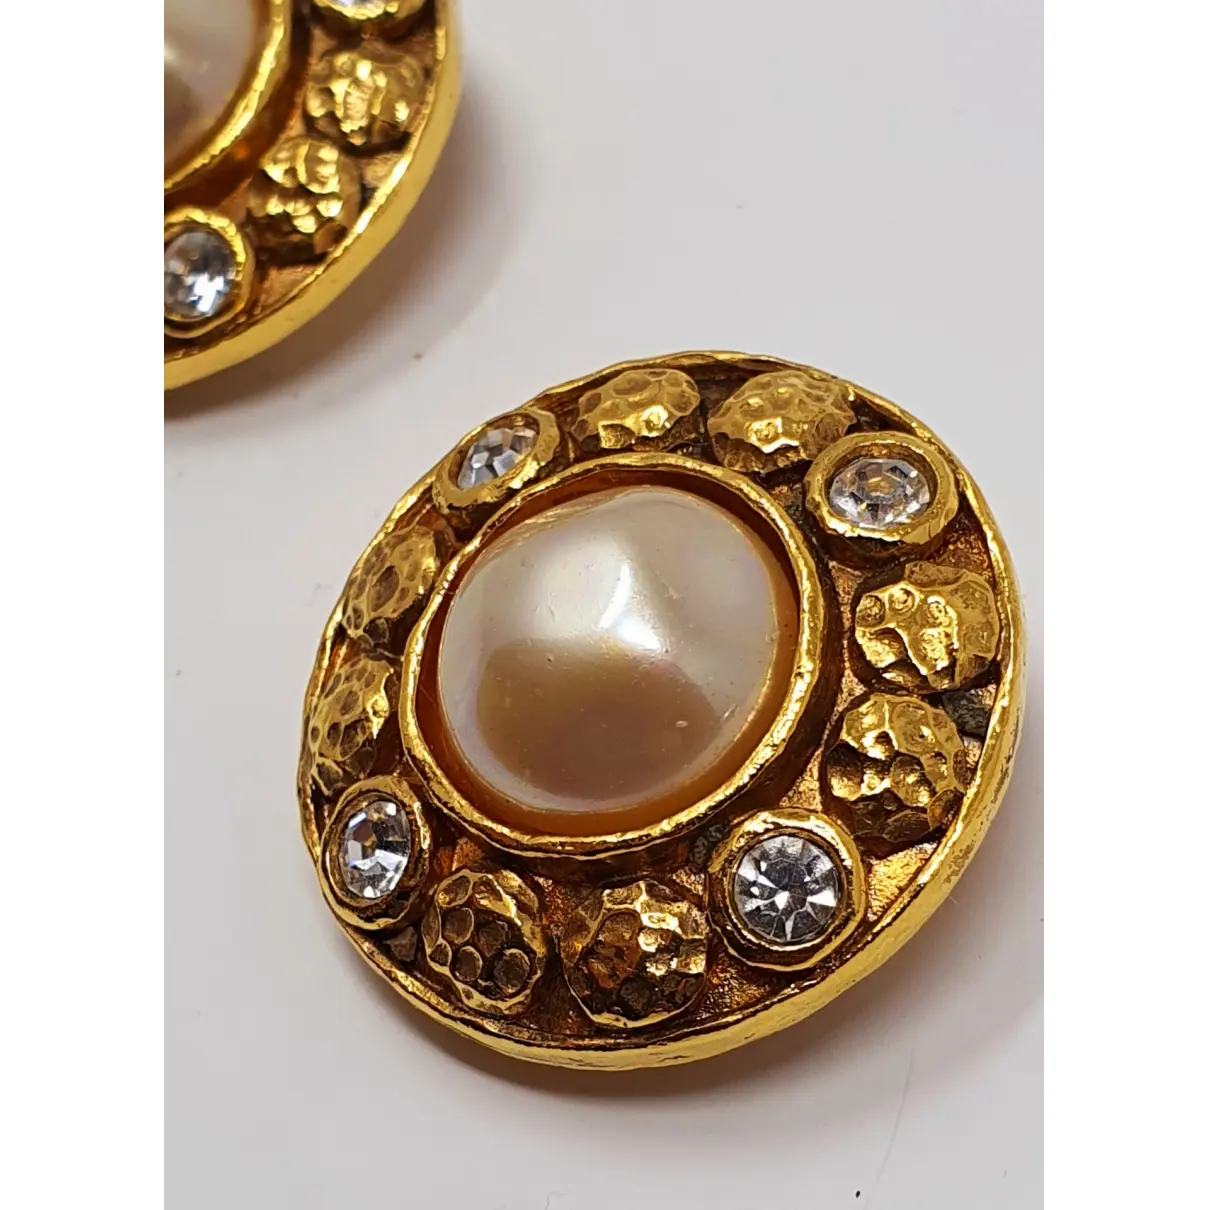 Baroque earrings Chanel - Vintage